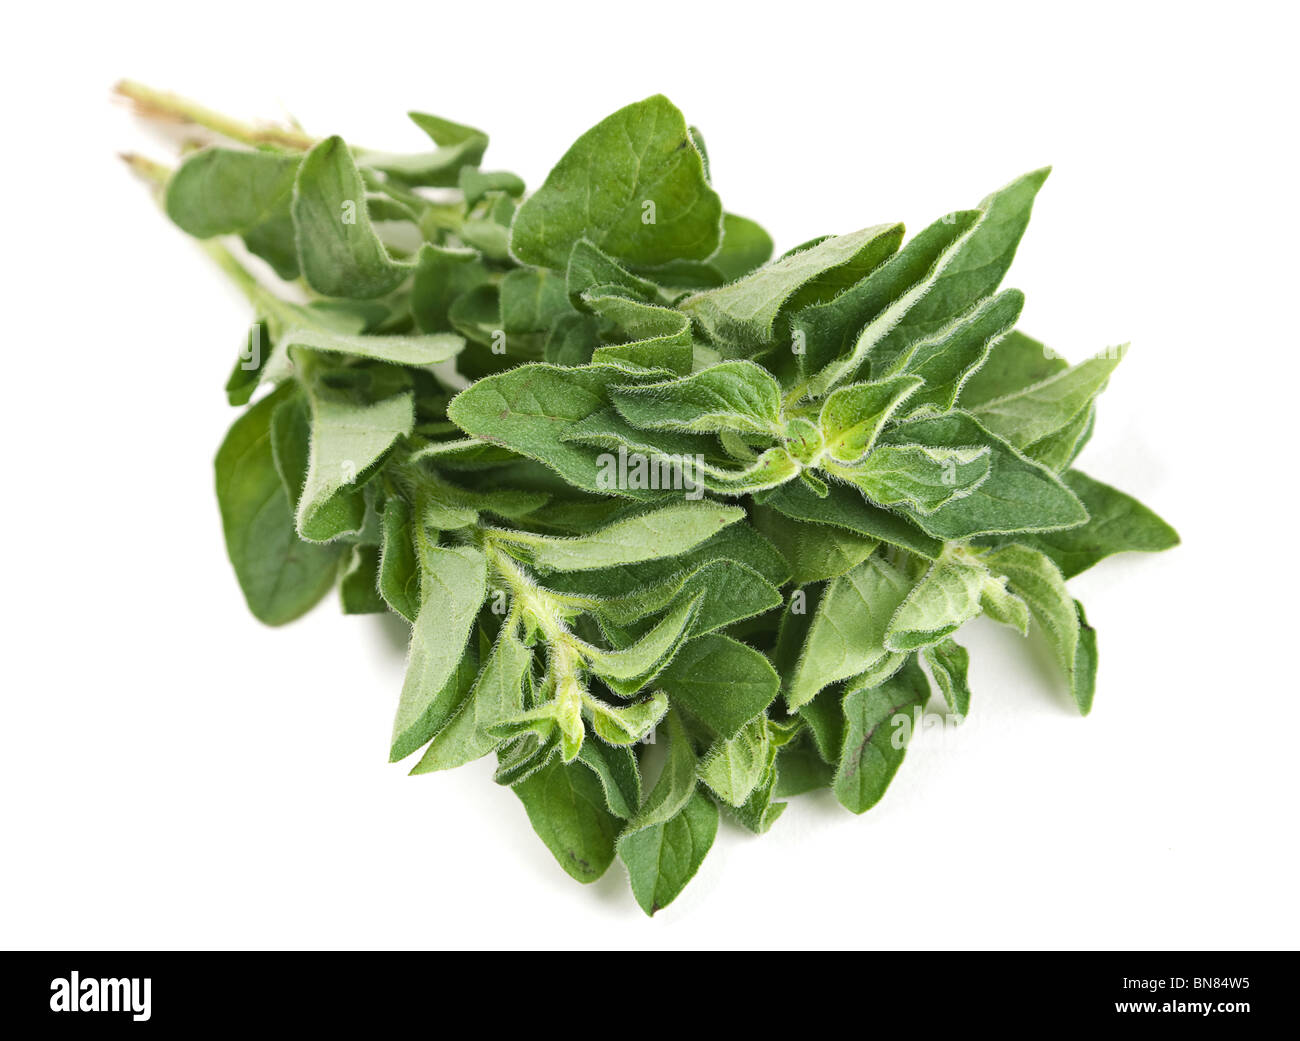 Oregano fresh herb bunch on white Stock Photo